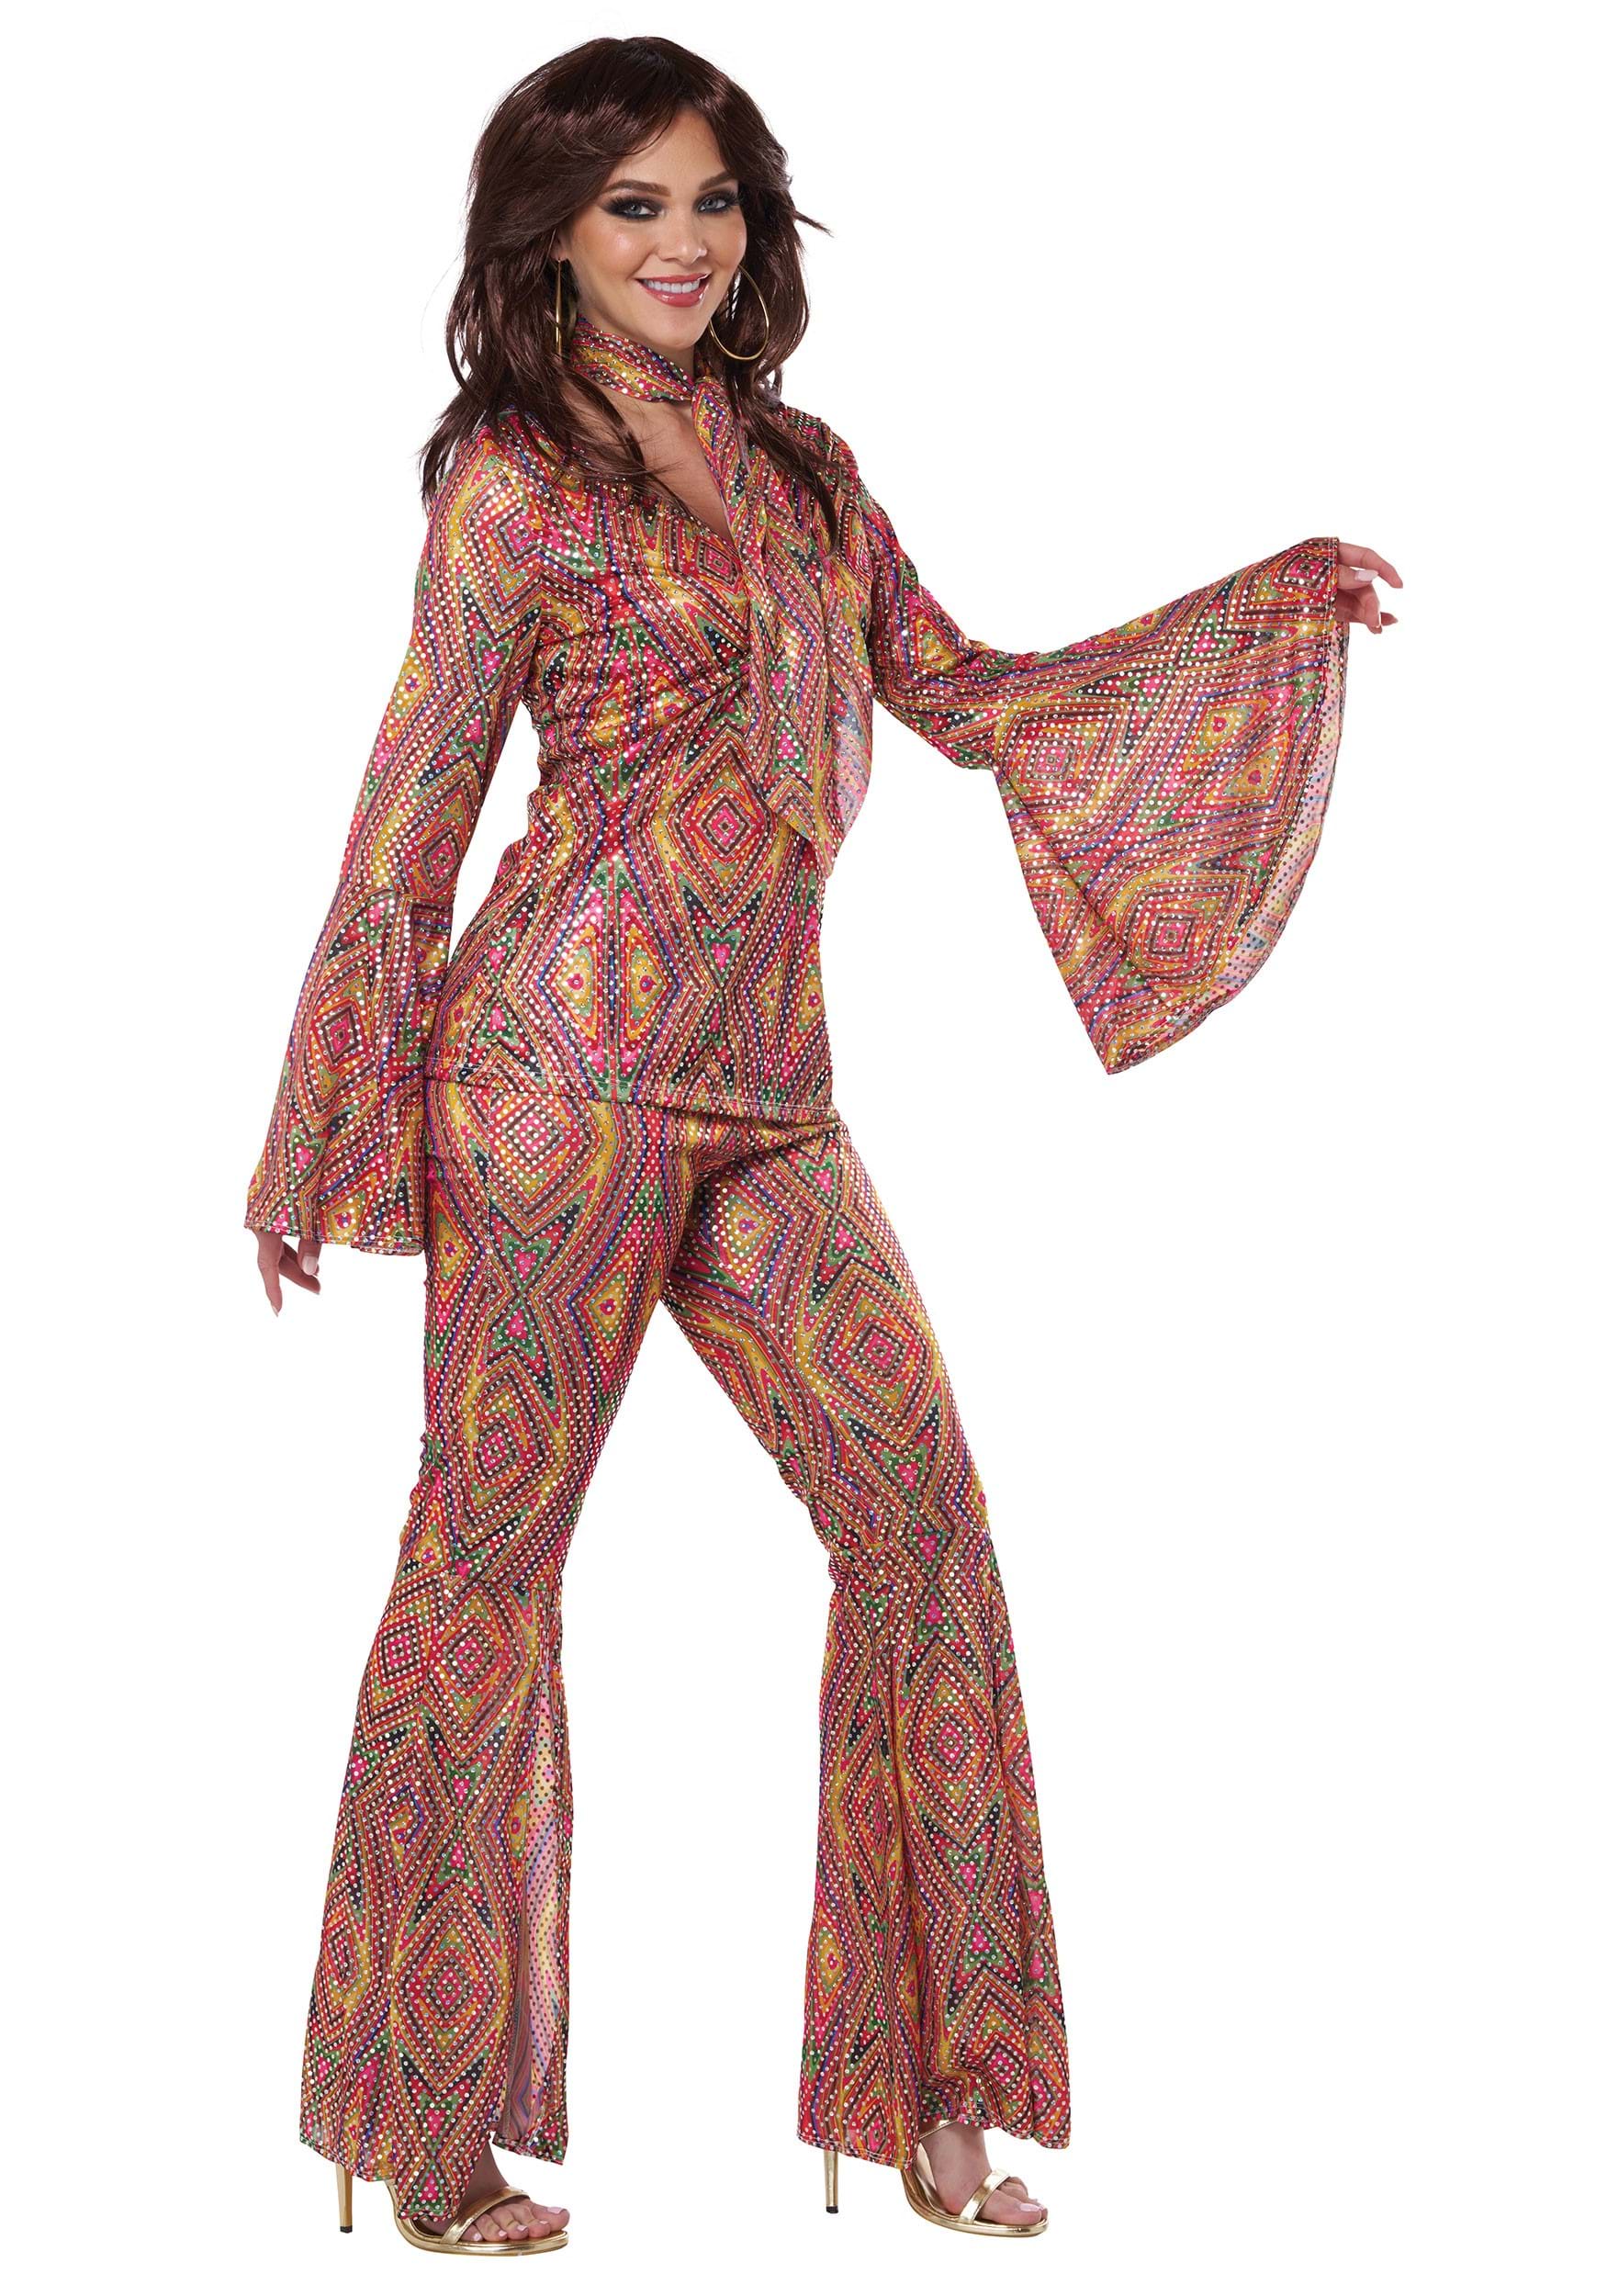 Women's 1970s DiscoLicious Costume | Decade Costumes